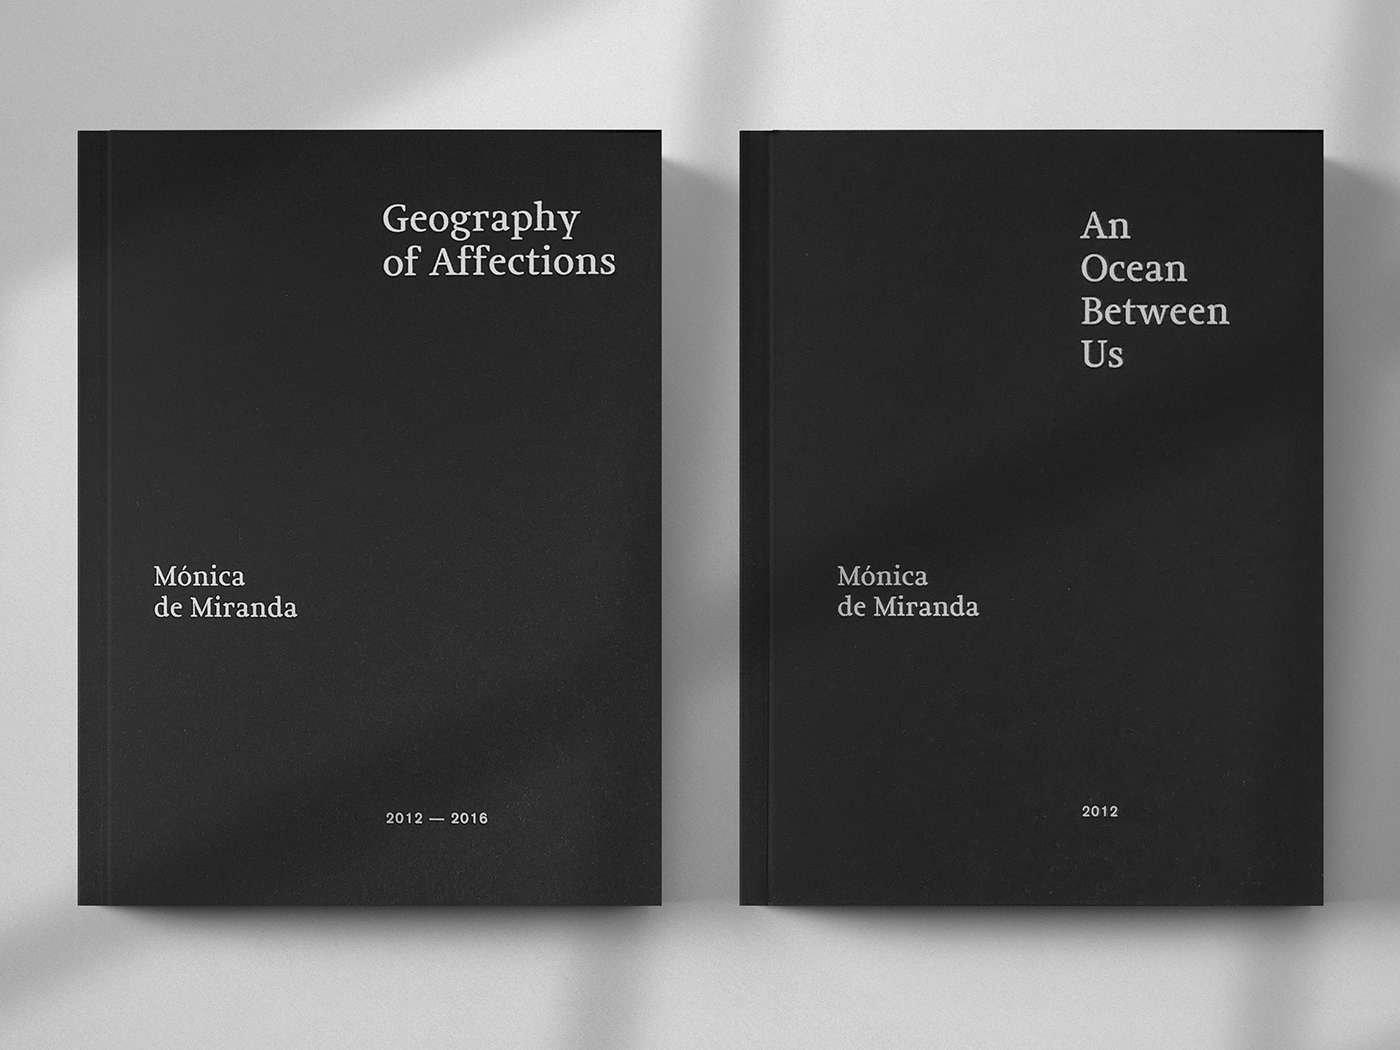 musa musaworklab editorial design monica de miranda book book design editorial design  publication